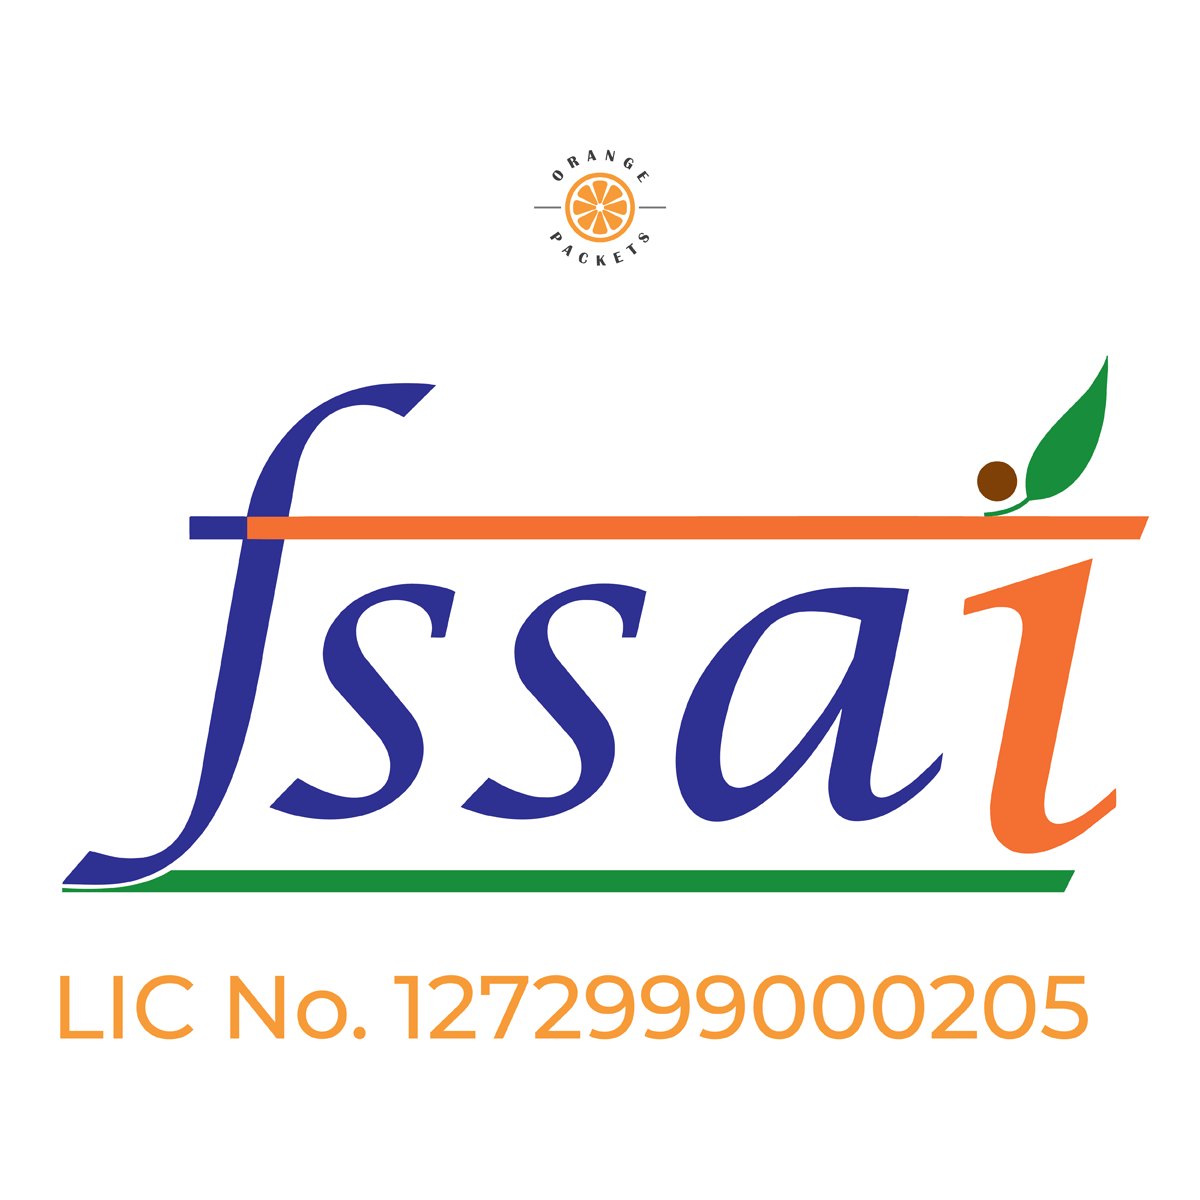 fssai licence number